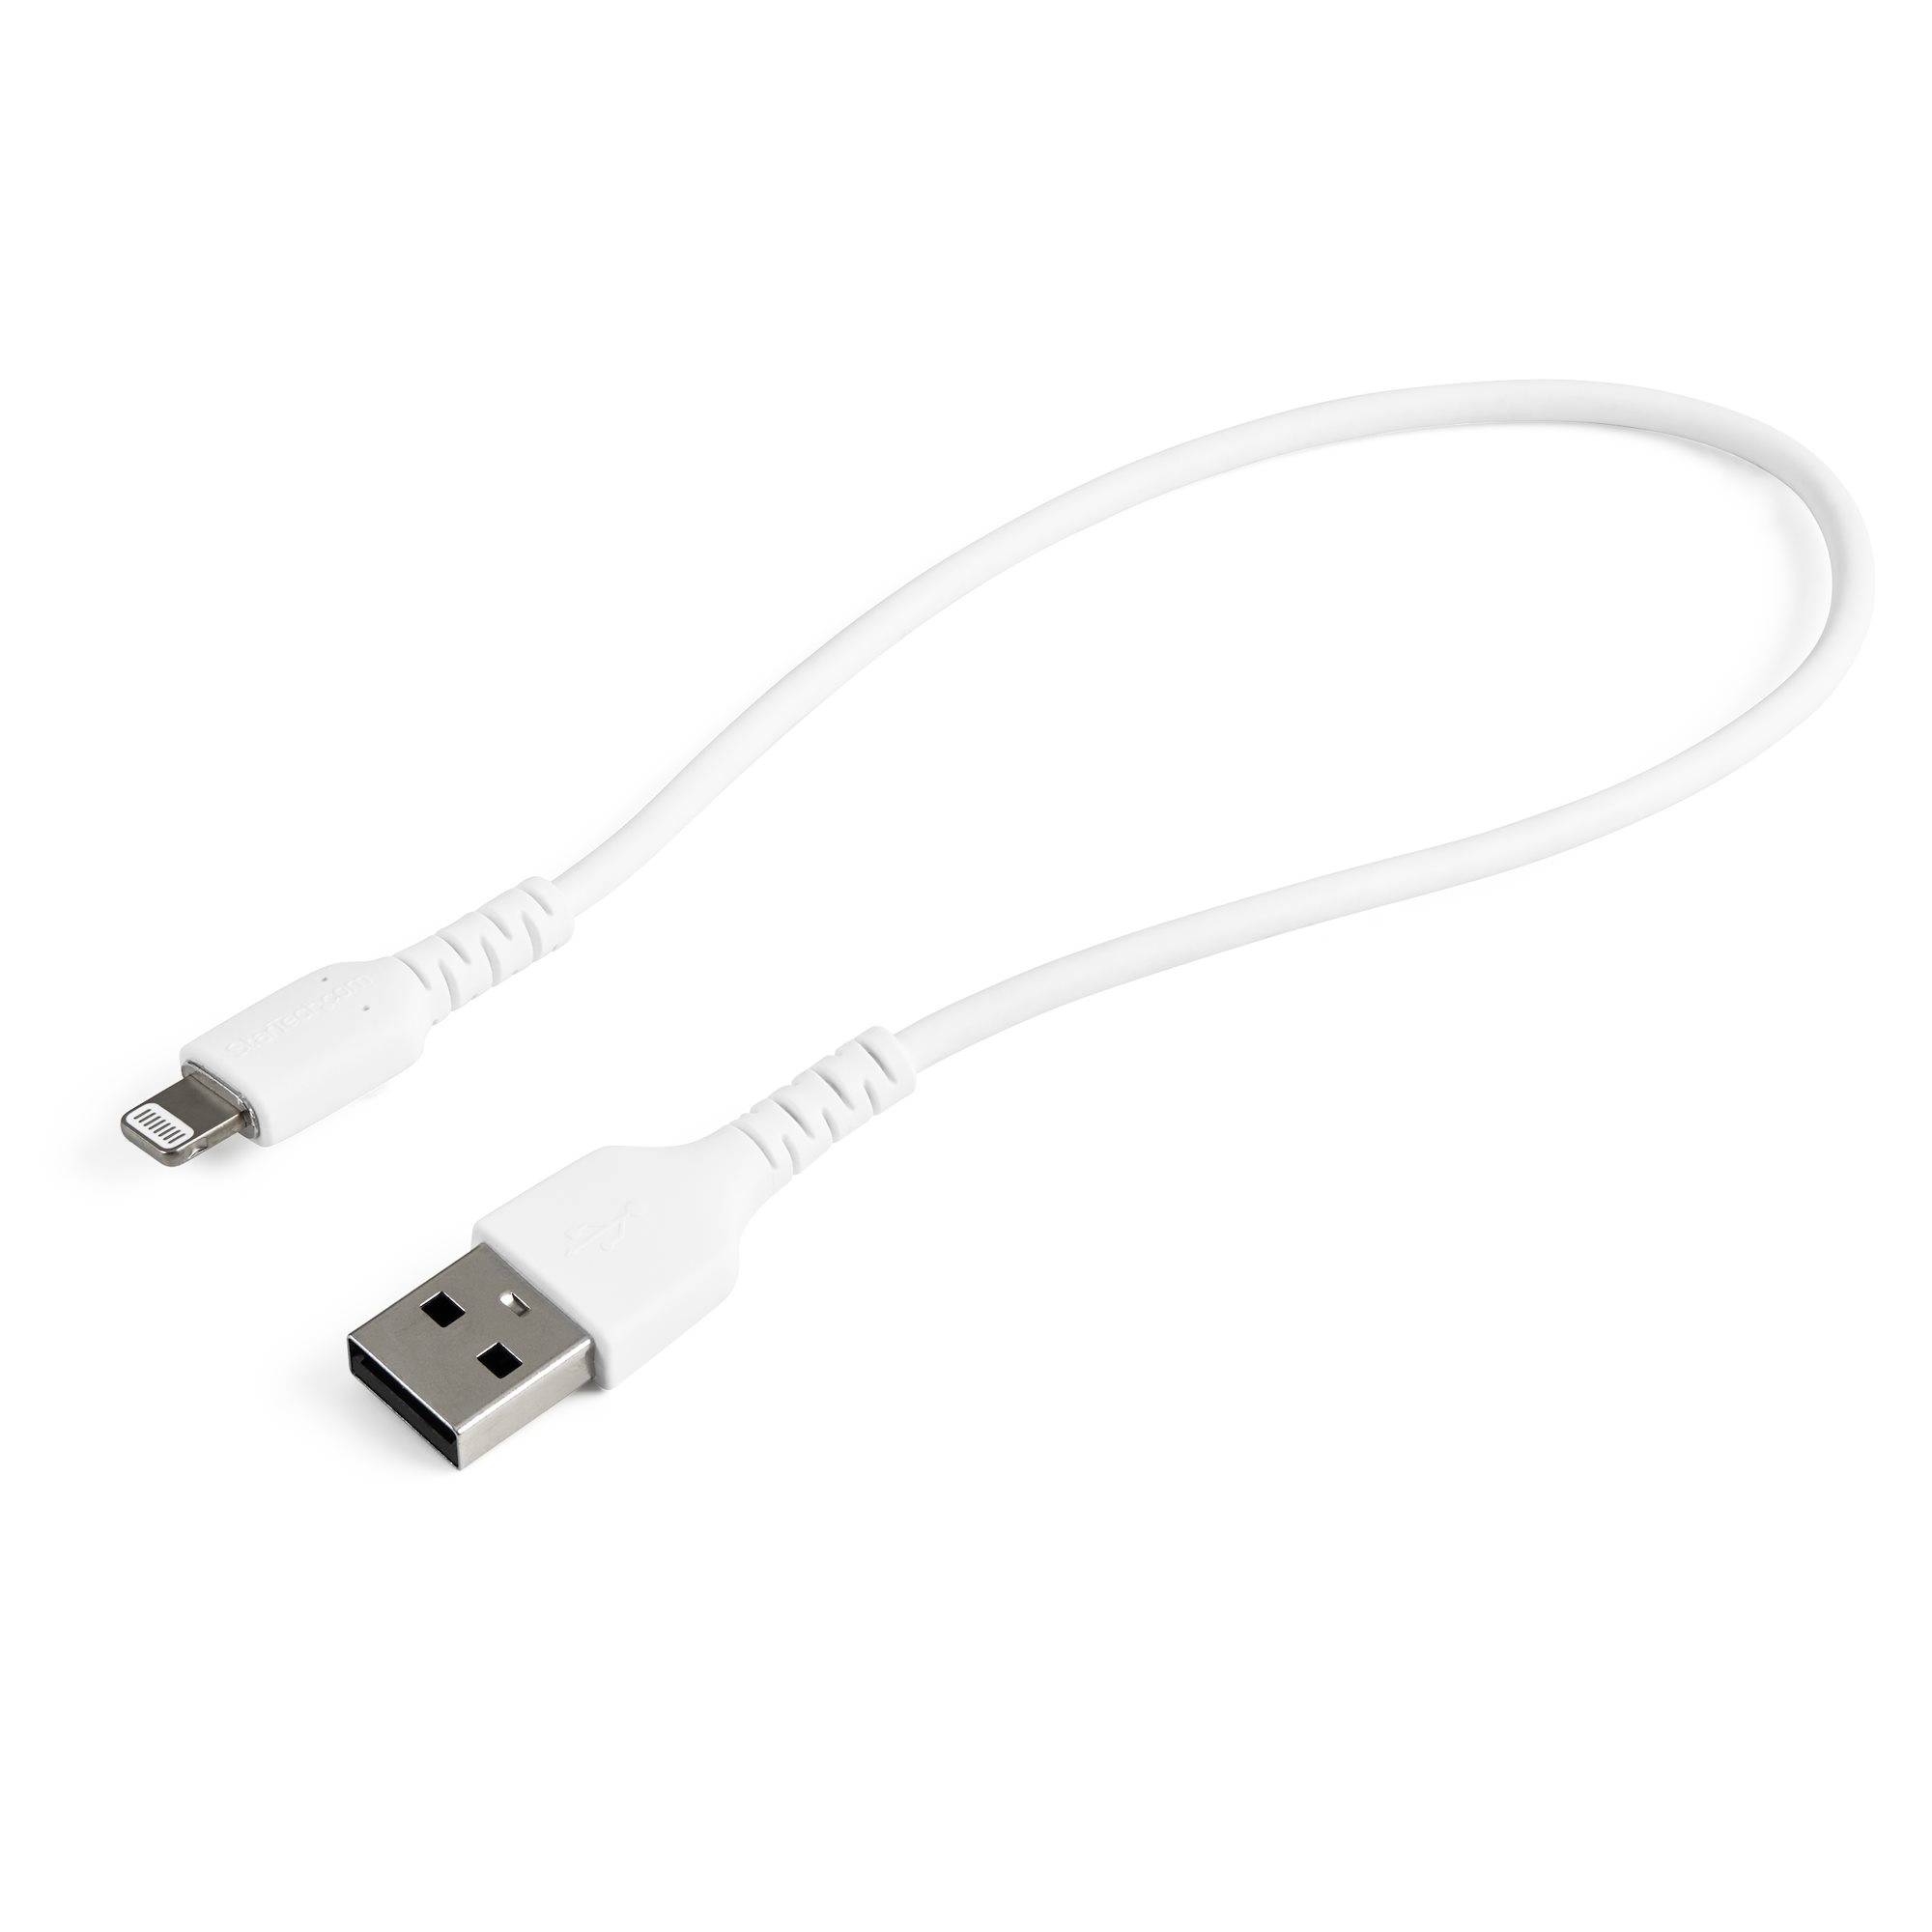 Rca Informatique - Image du produit : 30CM USB TO LIGHTNING CABLE APPLE MFI CERTIFIED - WHITE